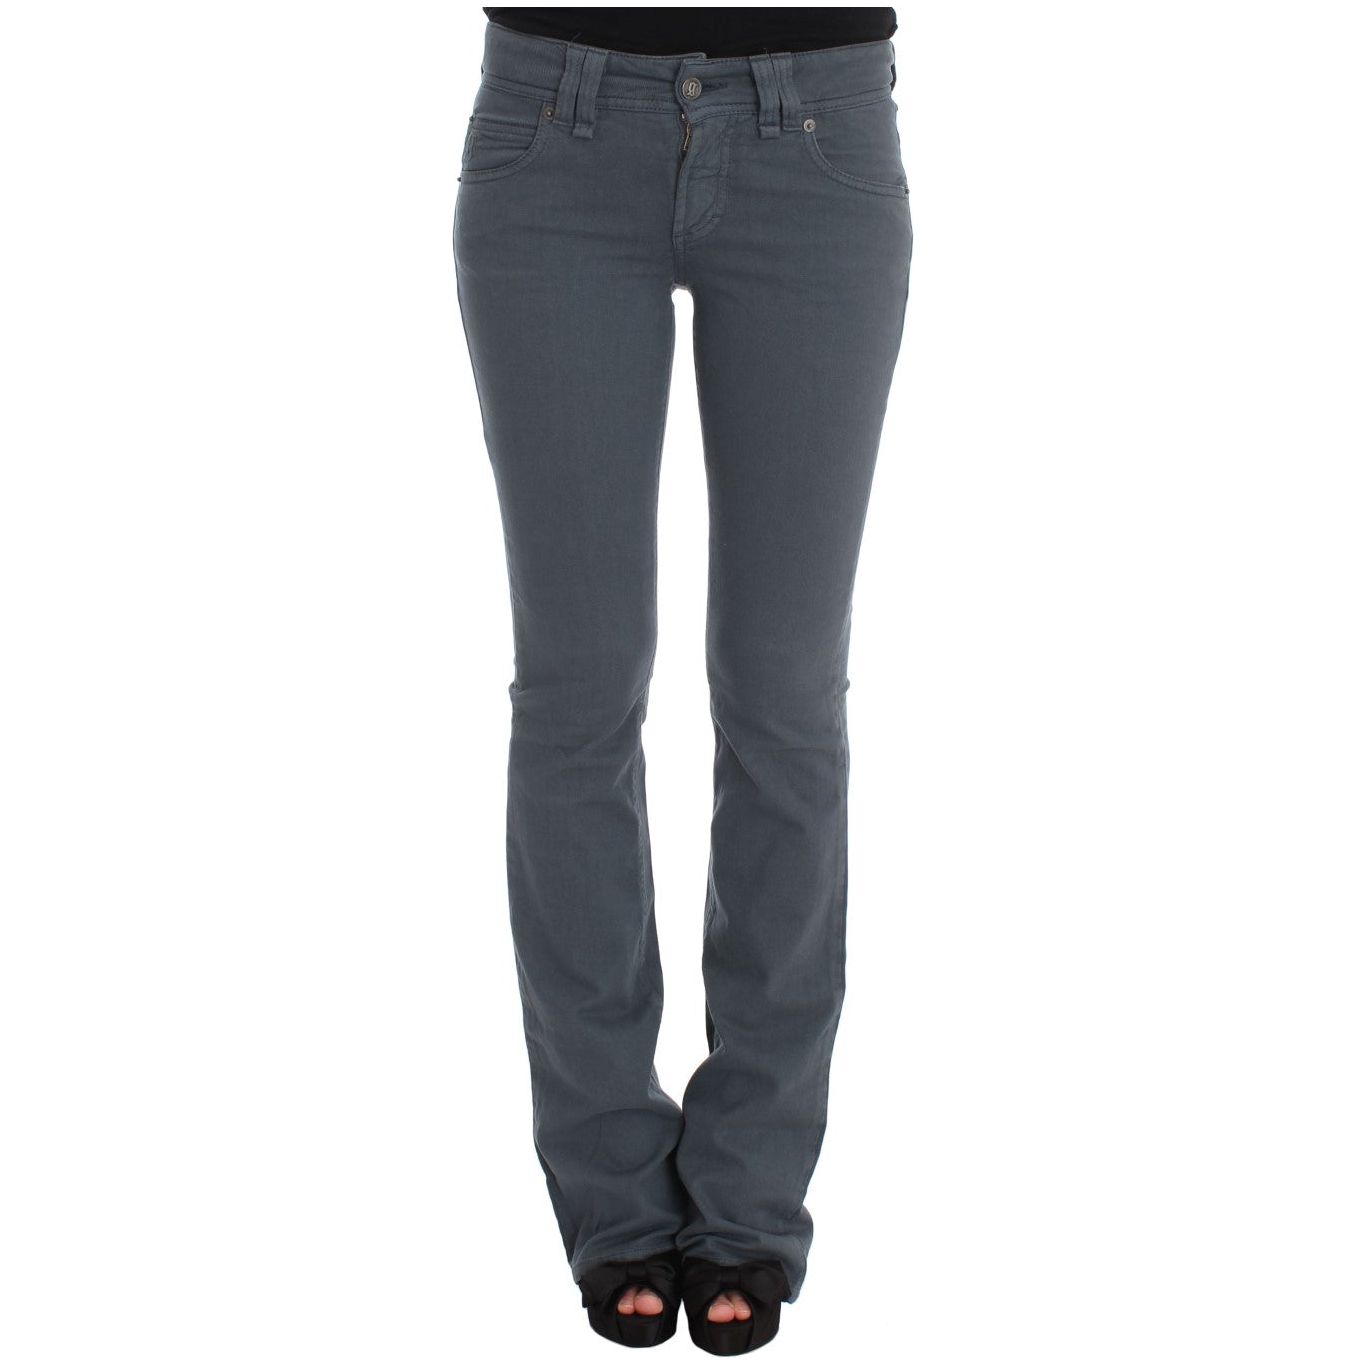 John Galliano Elegant Slim Fit Bootcut Jeans Jeans & Pants blue-cotton-blend-slim-fit-bootcut-jeans-2 330188-blue-cotton-blend-slim-fit-bootcut-jeans-3.jpg